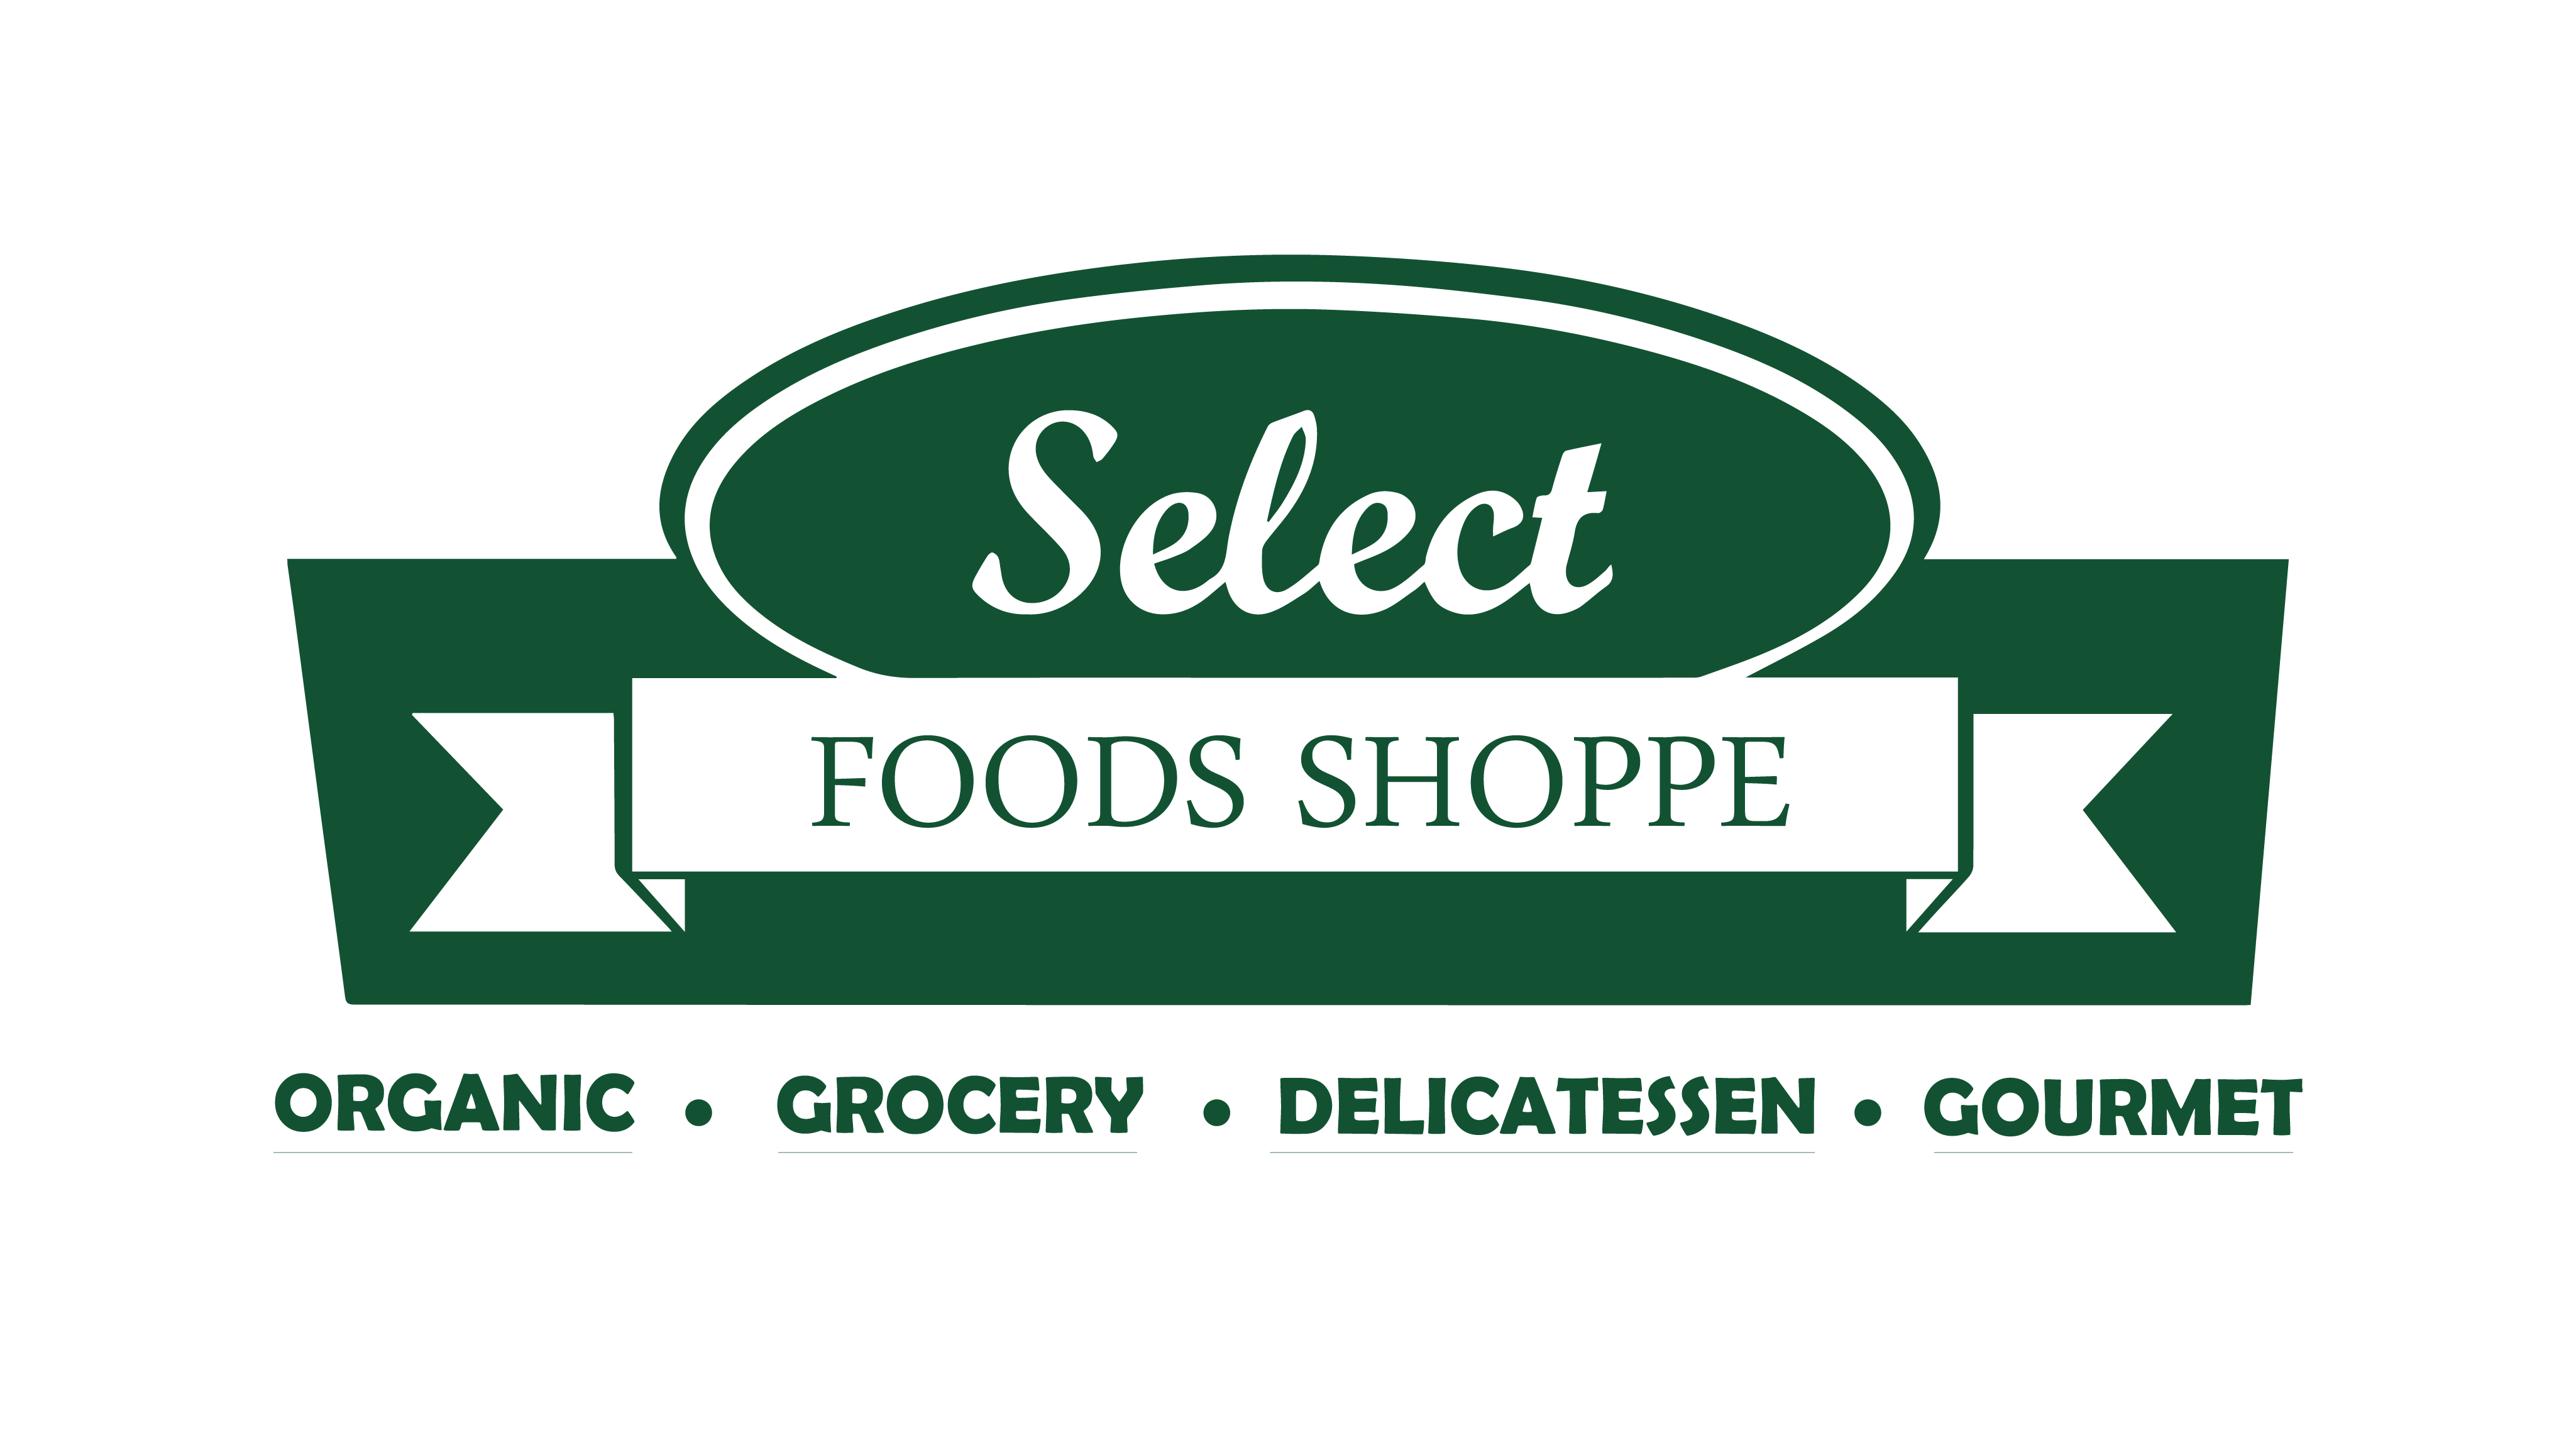 Select Foods Shoppe